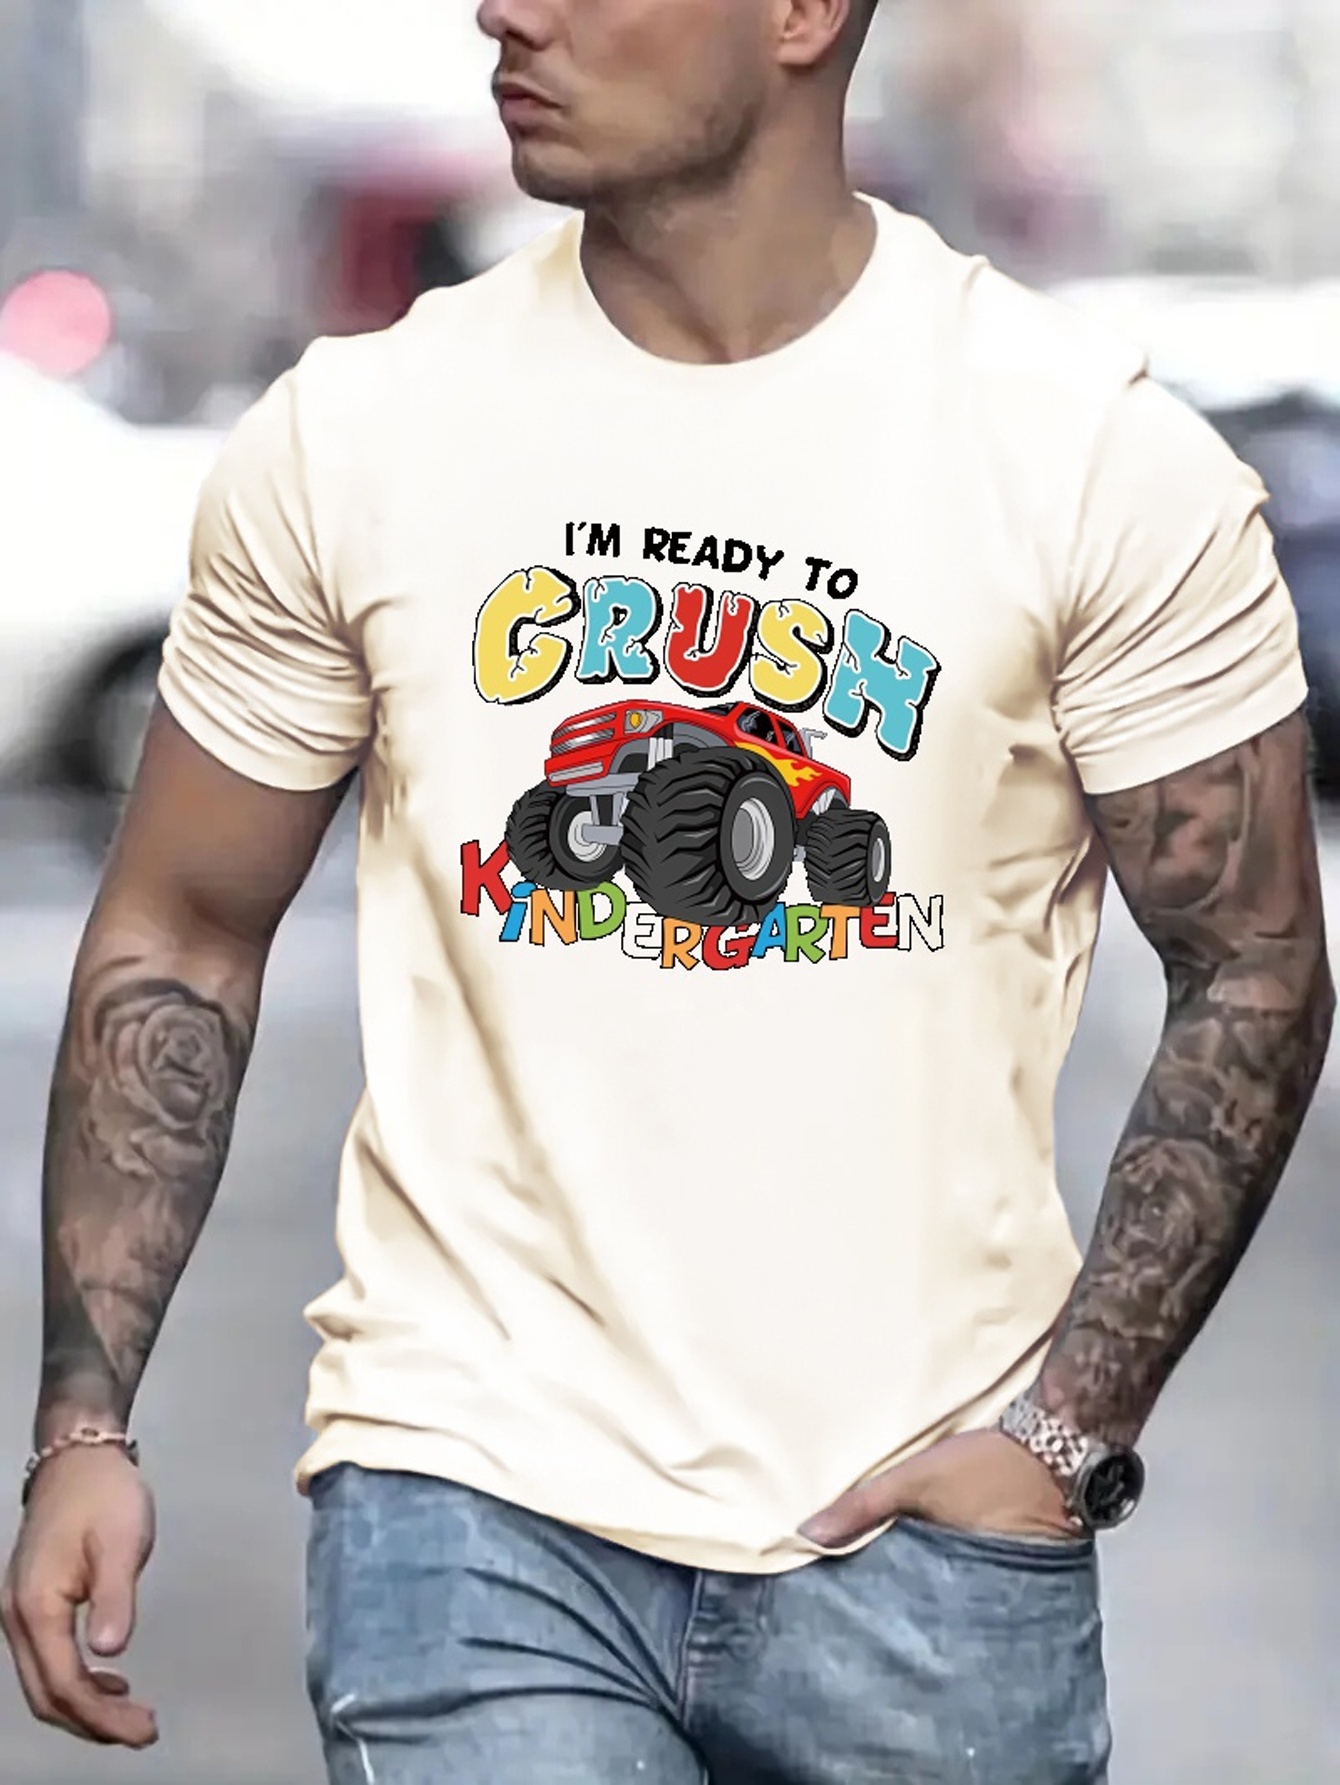 Camiseta Manga Larga Hombre Estampado Cool Alphabet K - Temu